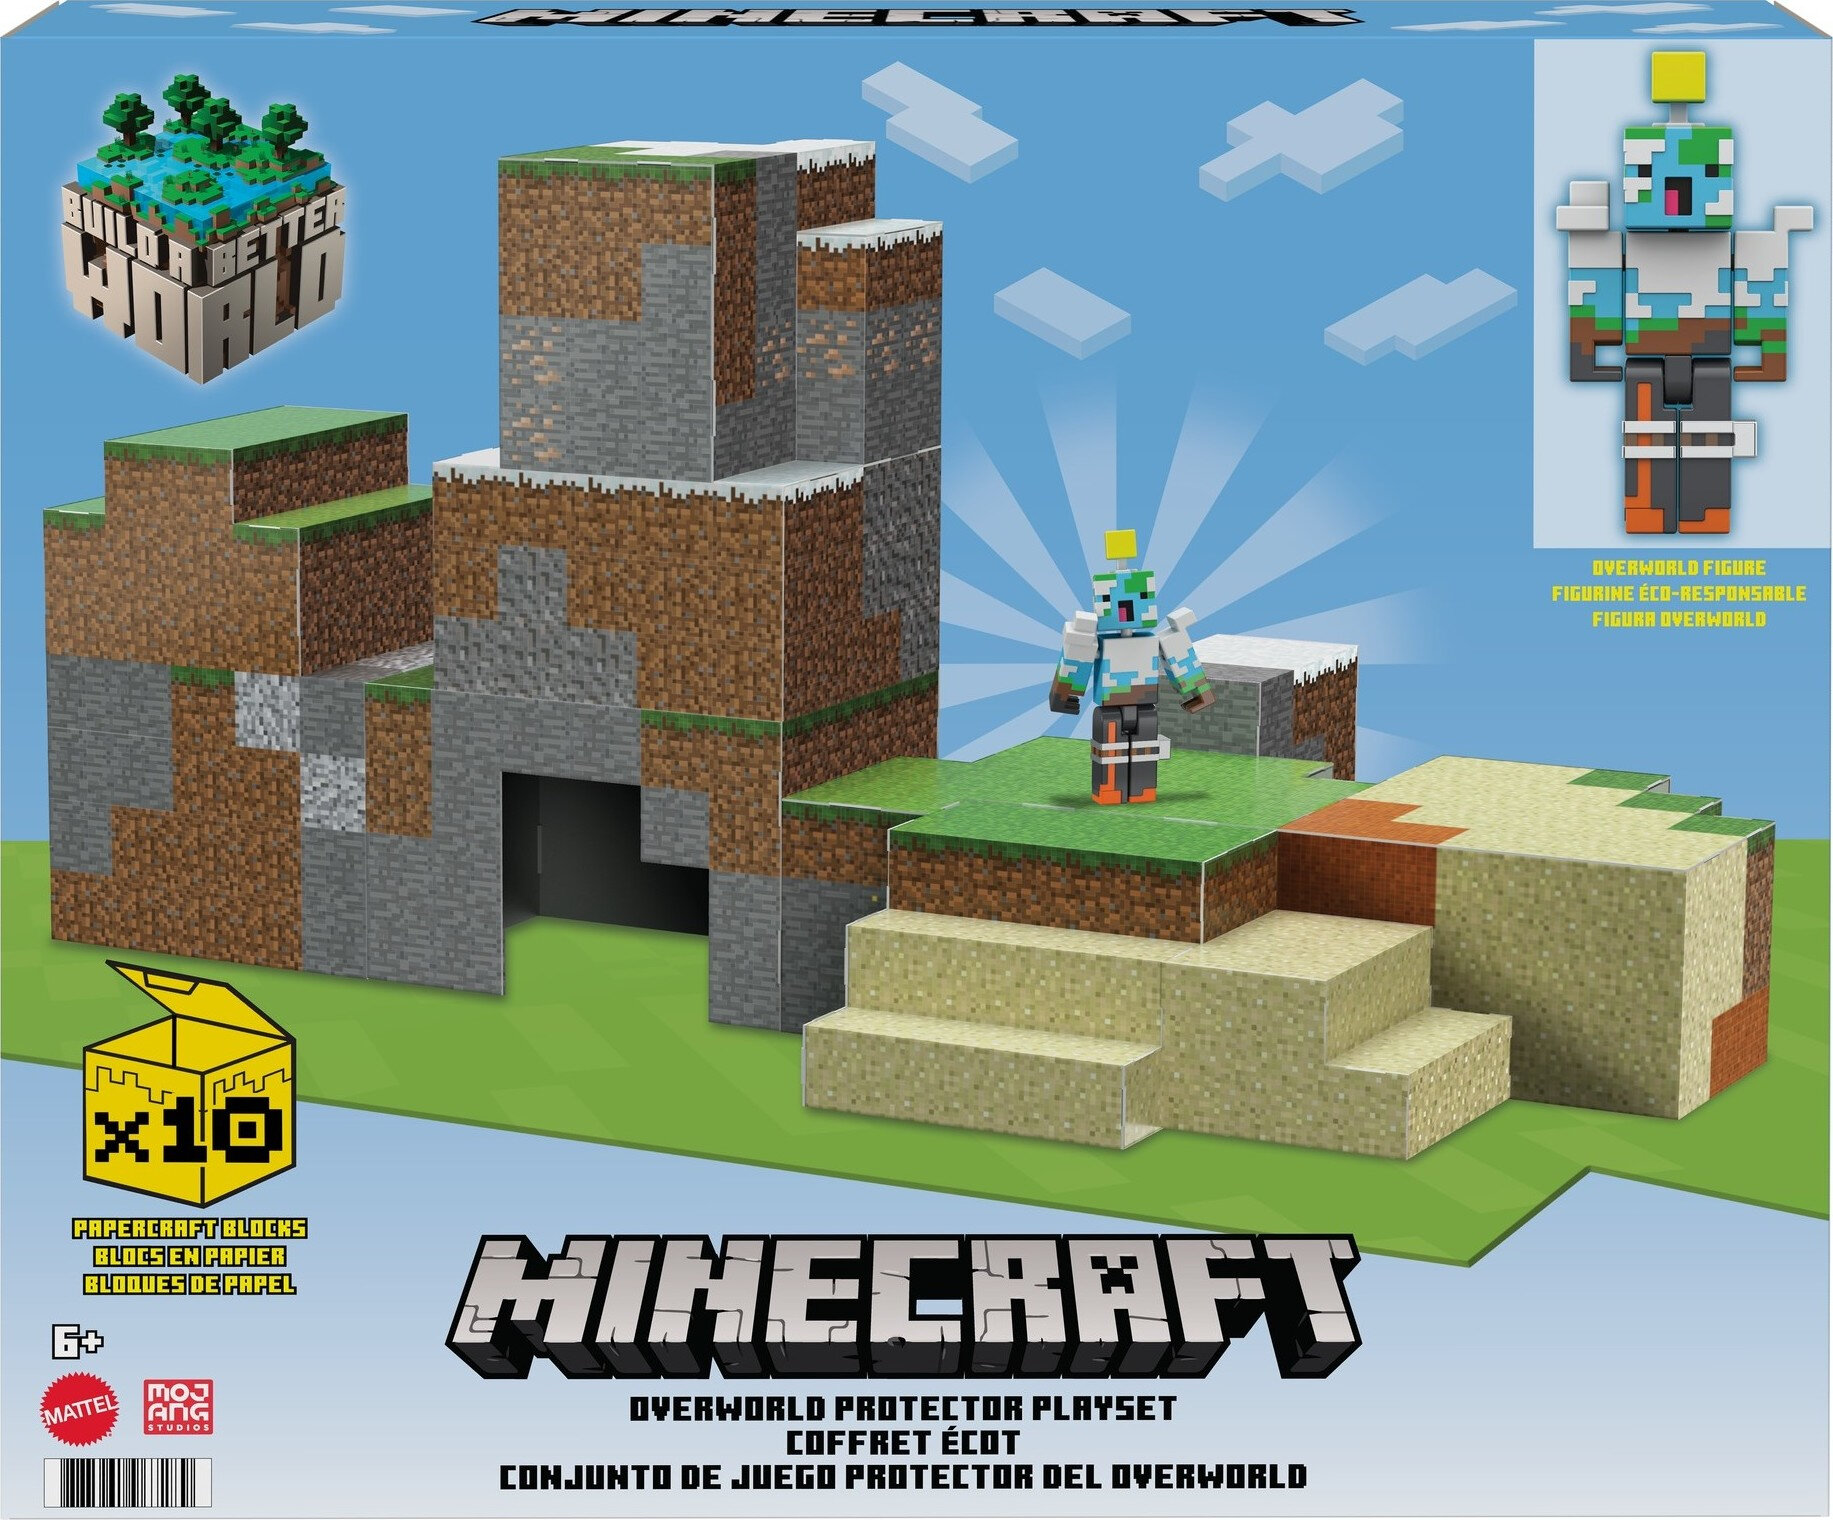 Minecraft Overworld Playset with 1 Action Figure & 10 Papercraft